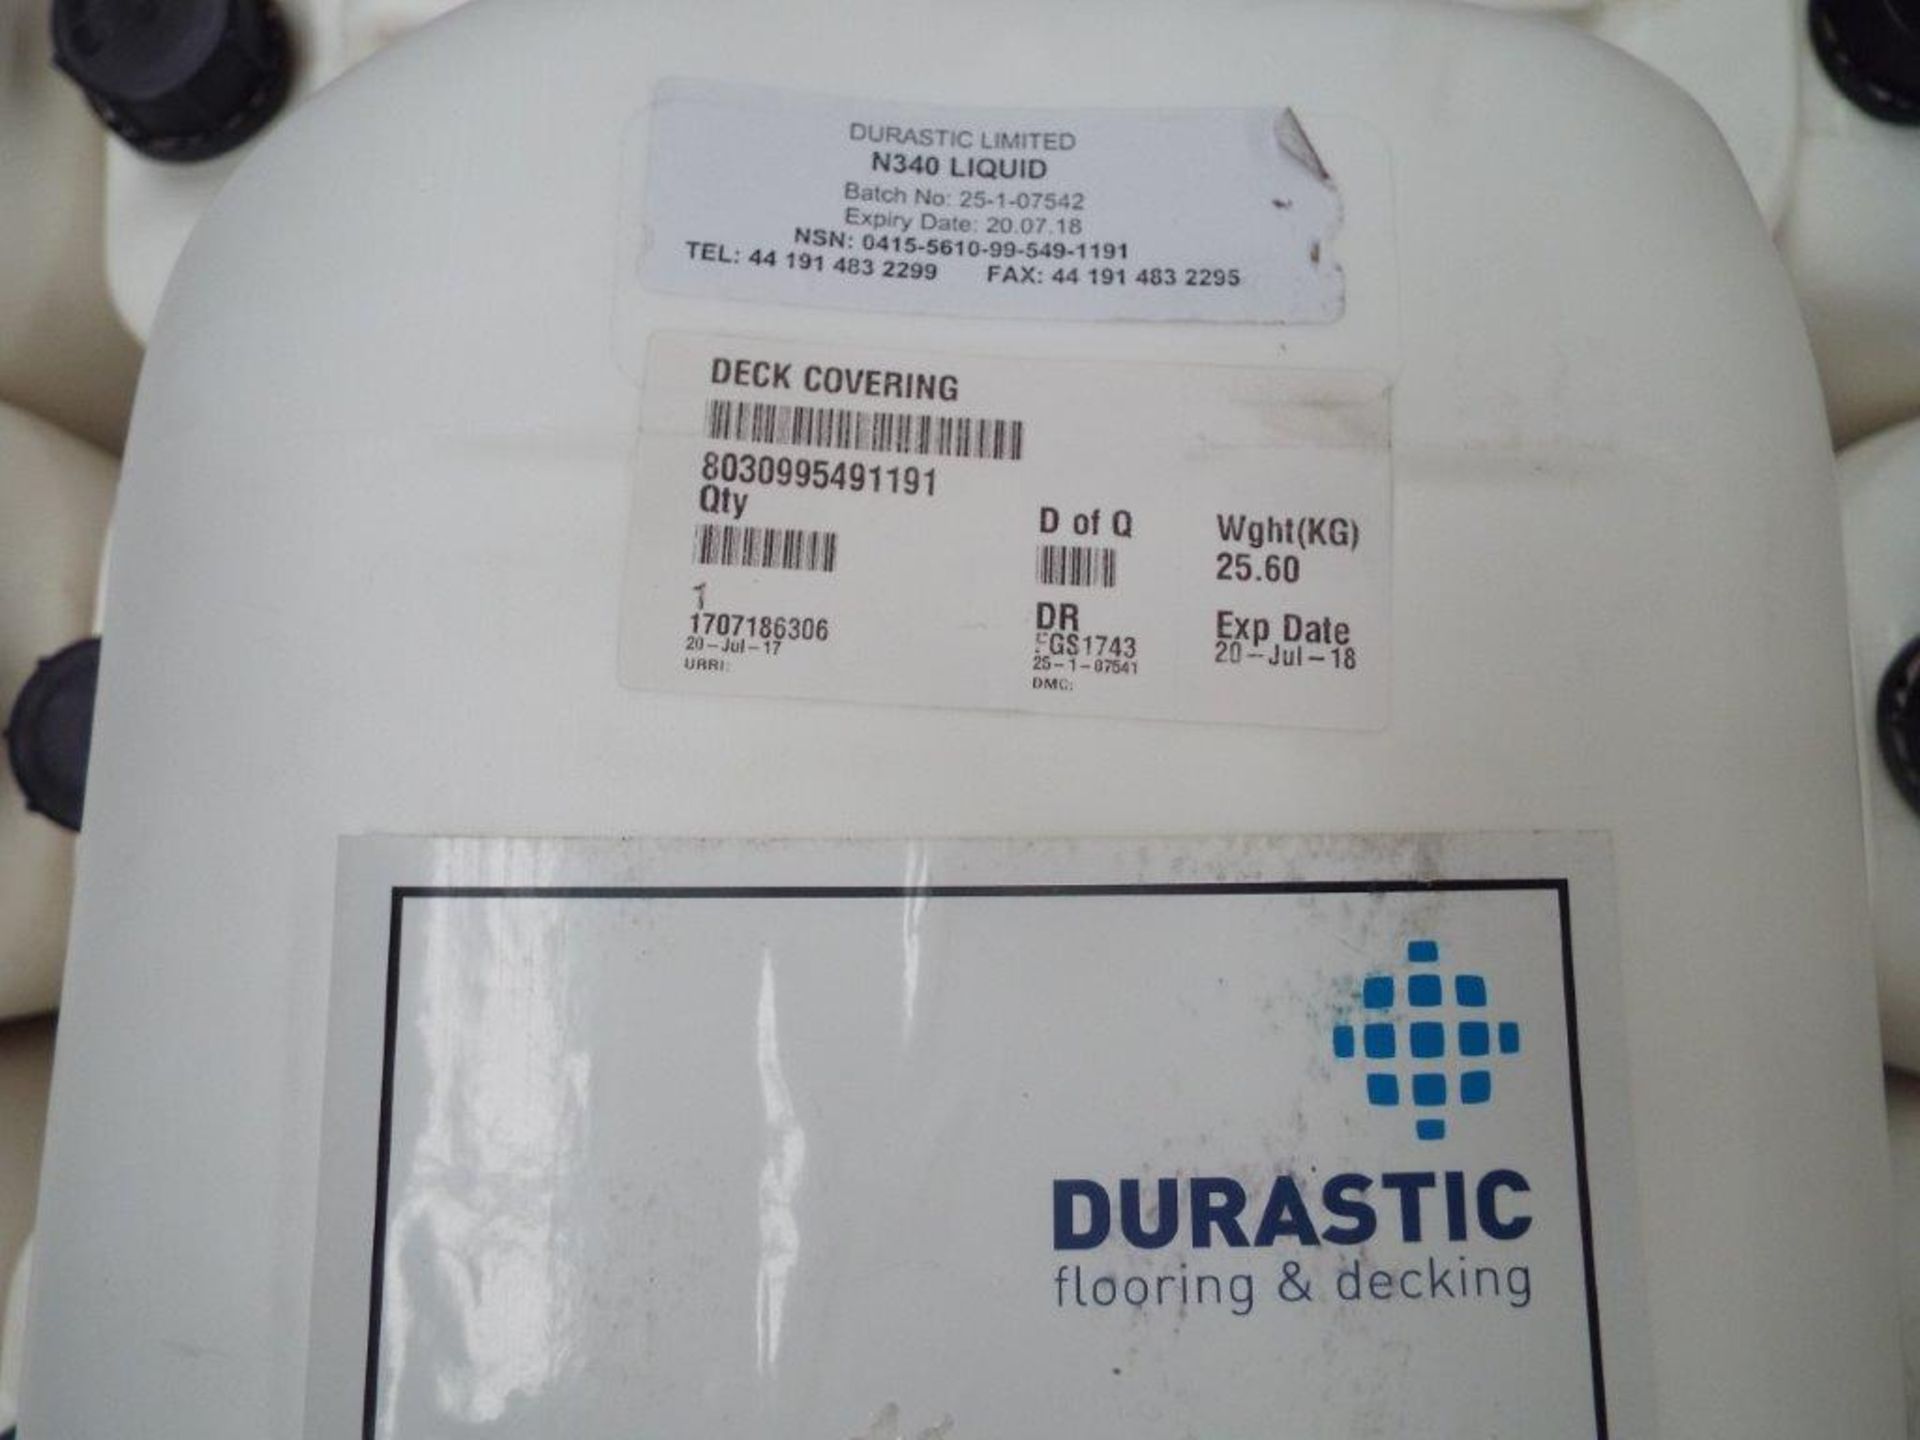 16 x Unissued 25Kg Tubs of Durastic N340 Deck Covering - Image 2 of 3